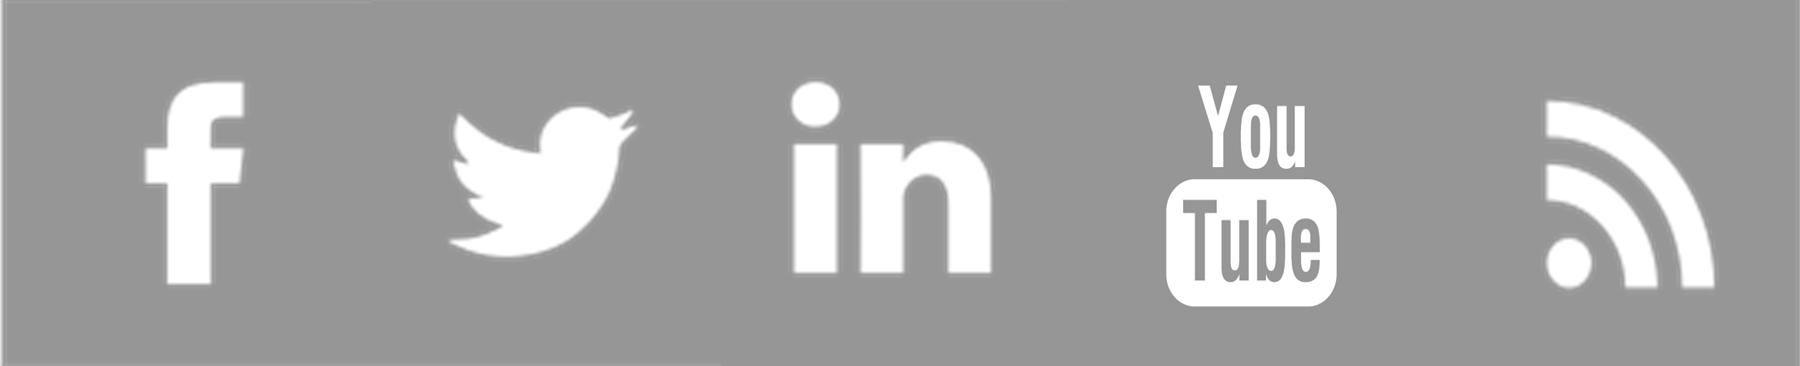 Facebook Twitter LinkedIn Logo - Twitter Facebook LinkedIn Icon Gray Image Logo Grey